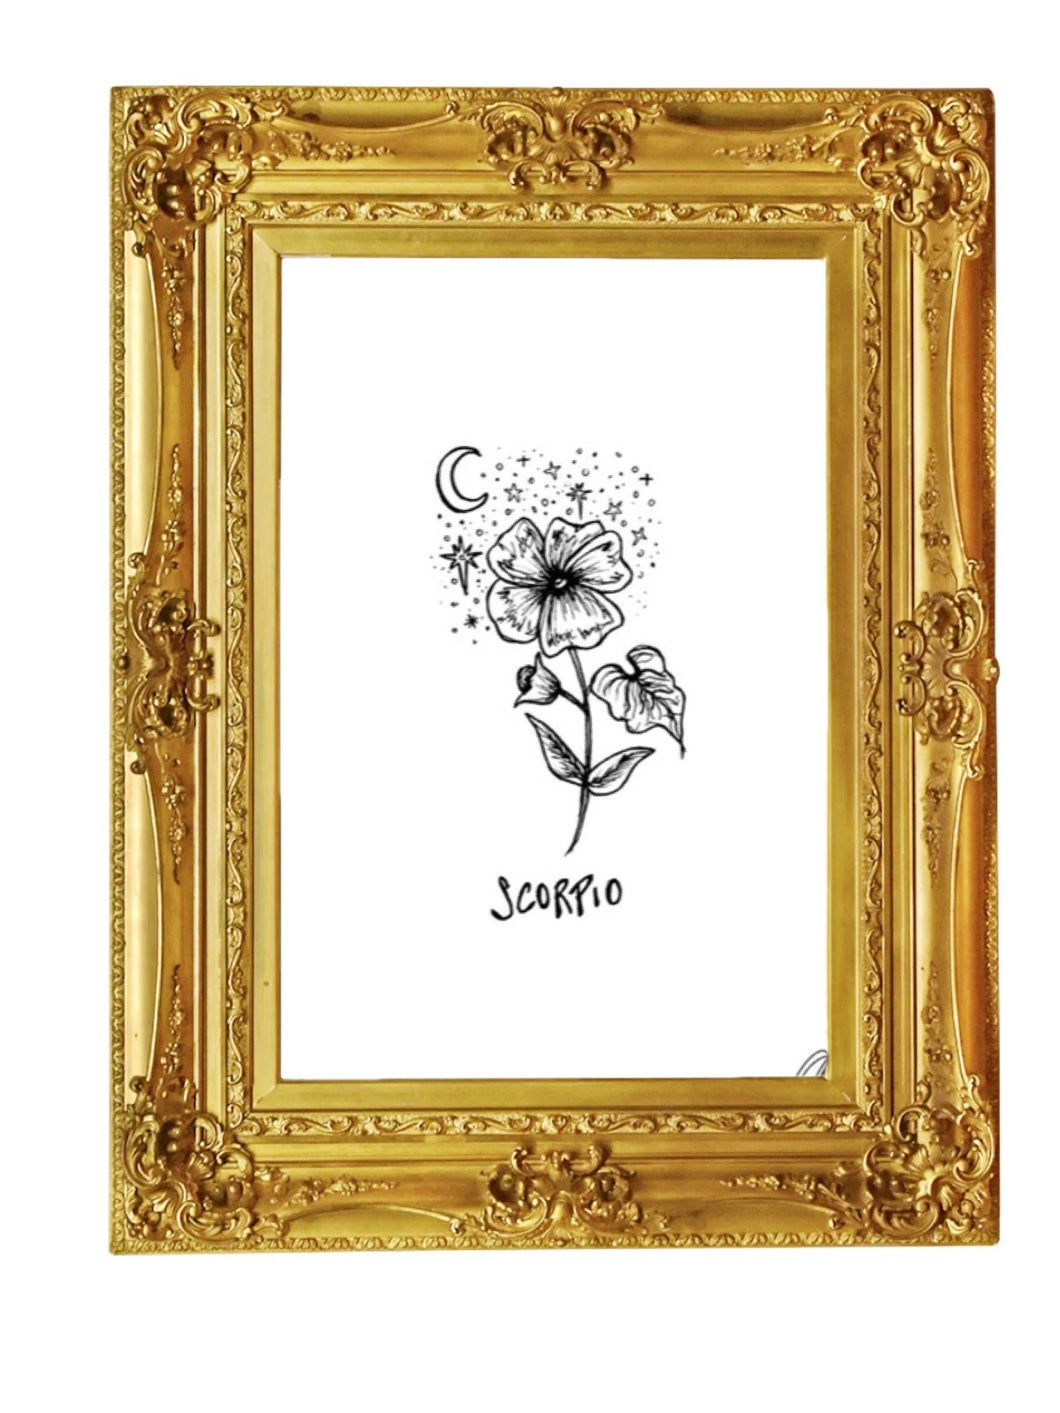 Scorpio Flower Art Print